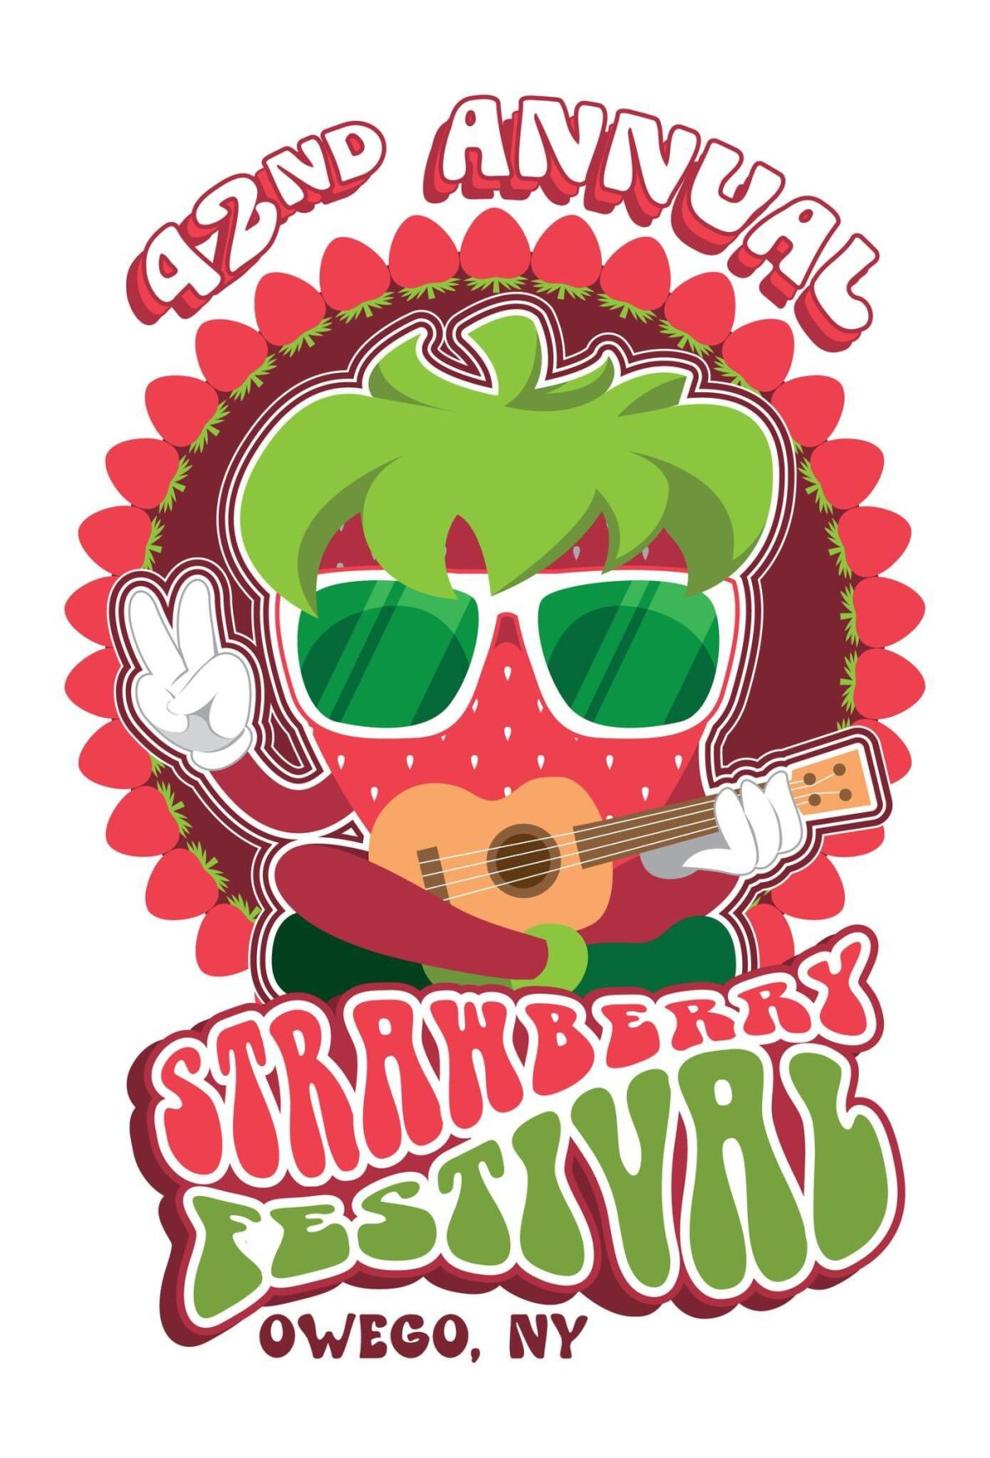 Strawberry festival returns to Owego this week | News | morning-times.com